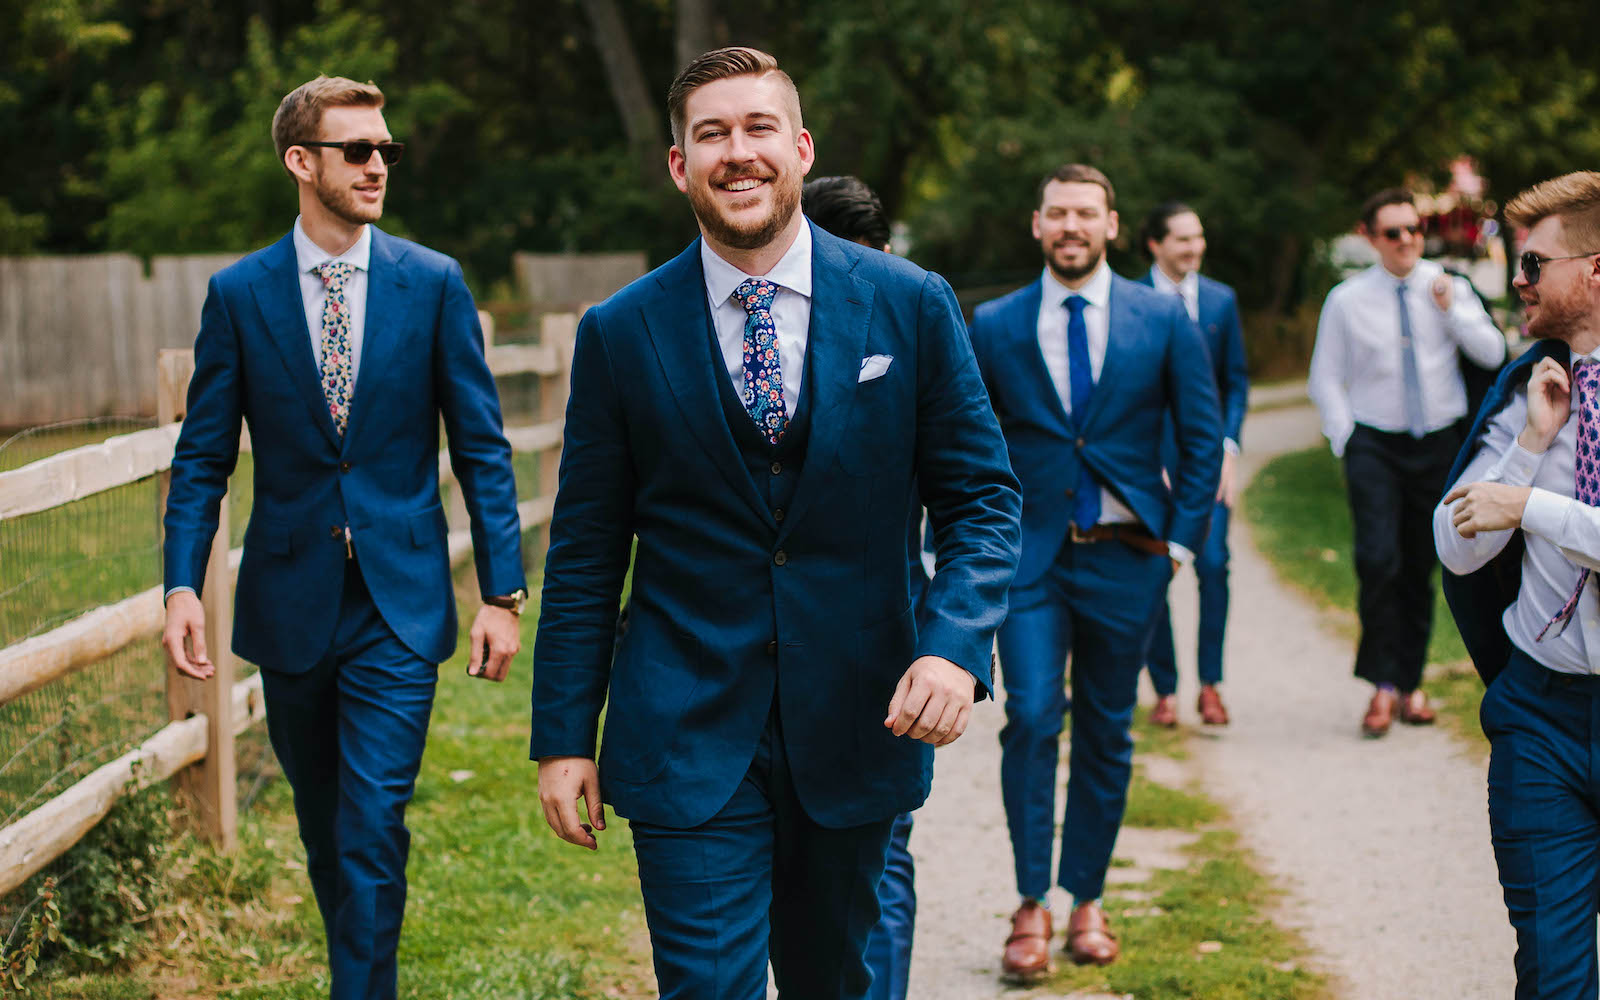 Men's Custom Wedding Ties & Bow Ties for Groomsmen